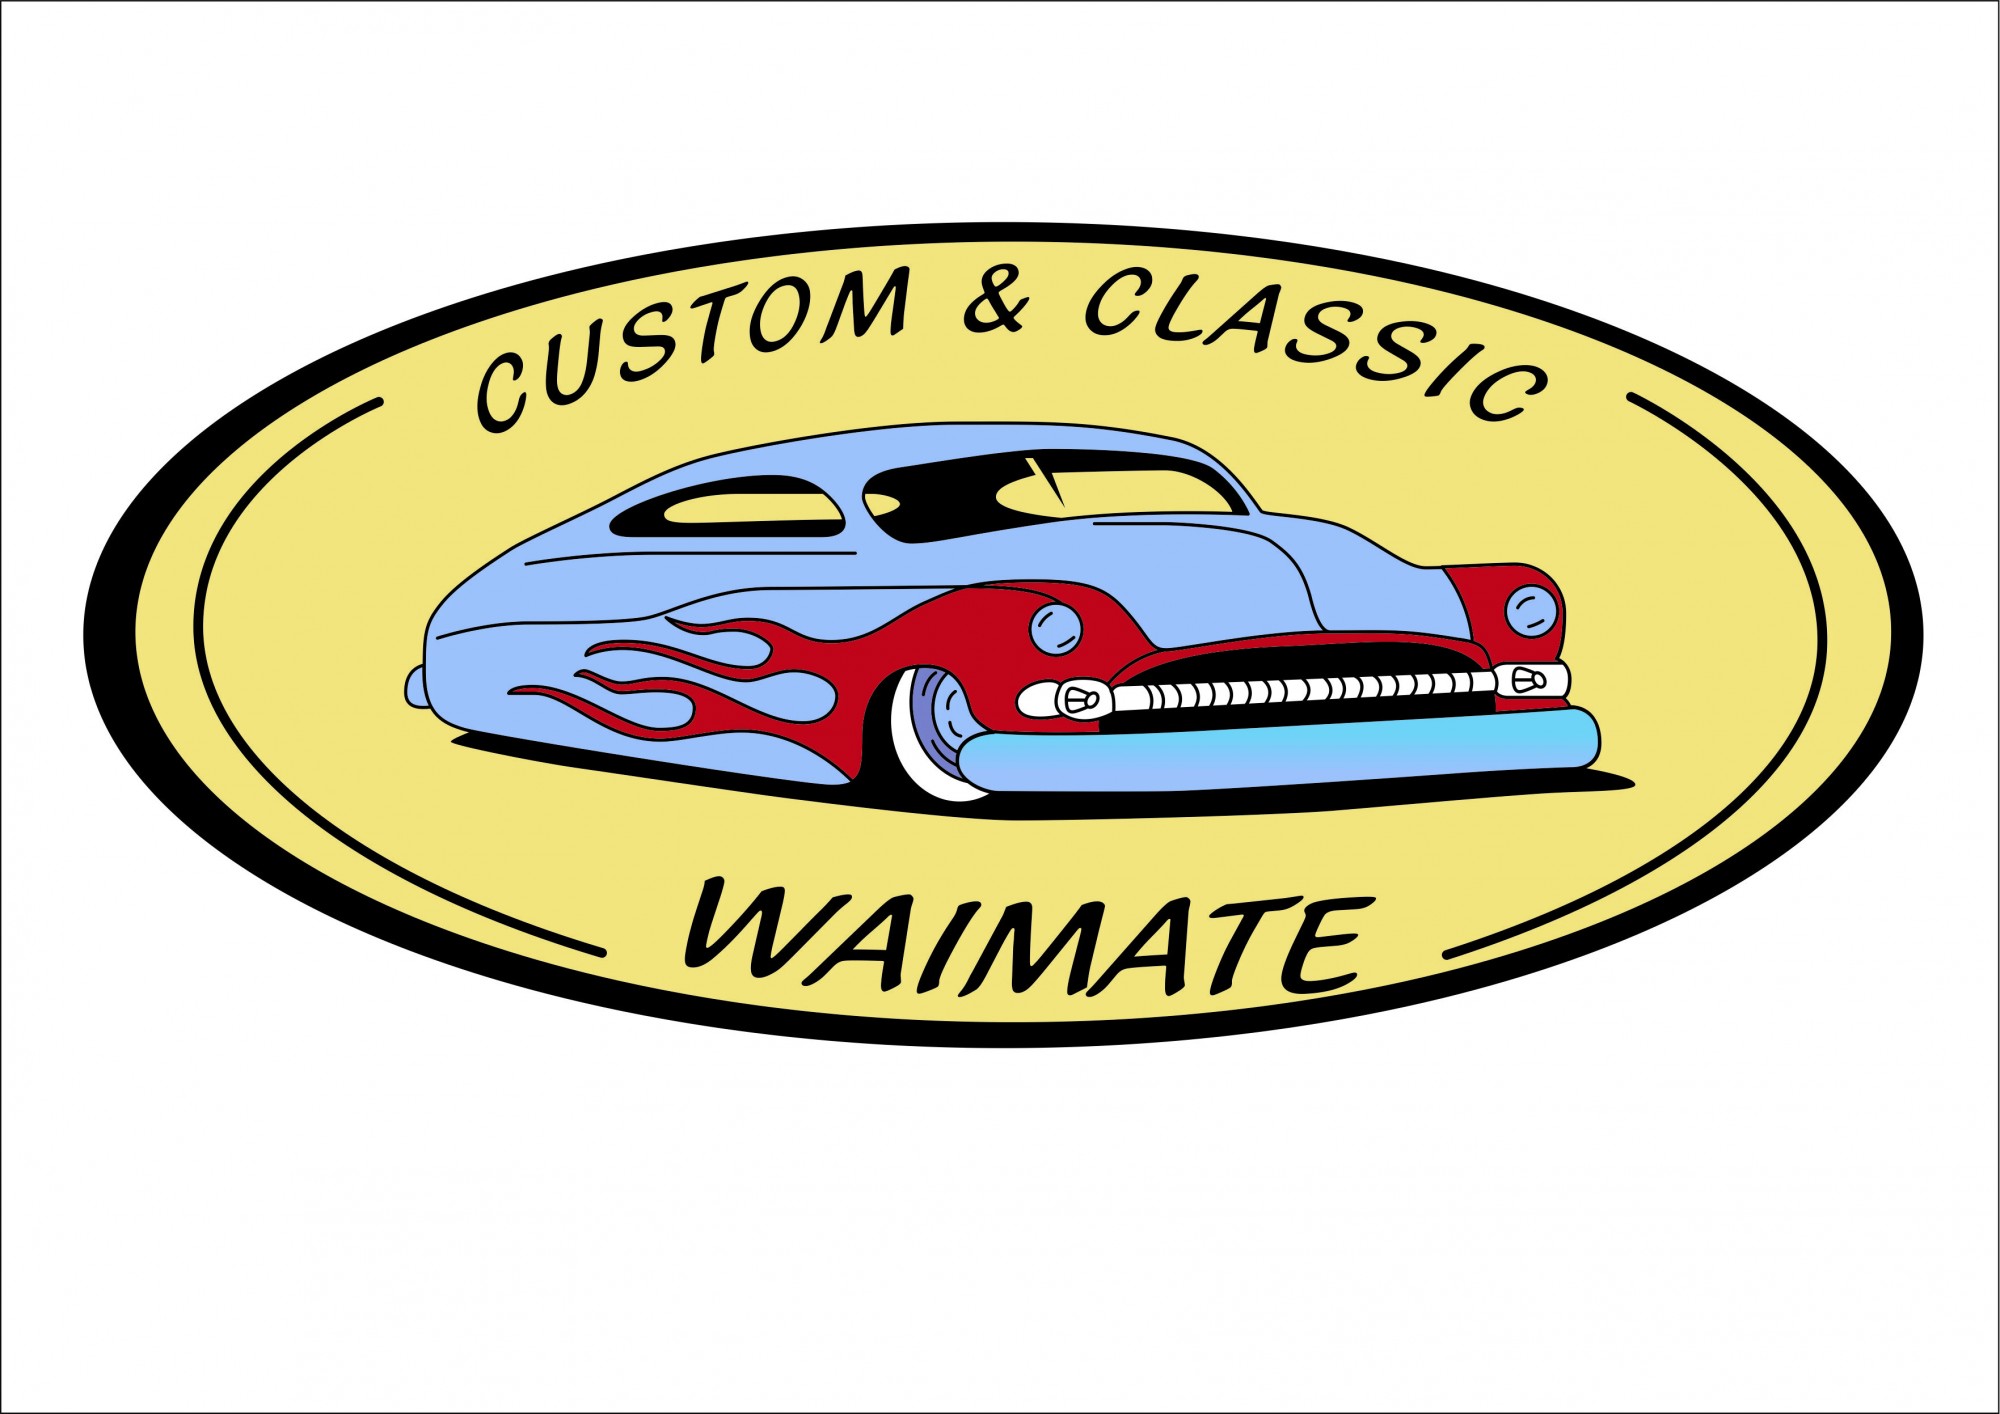 Custom & Classic Waimate